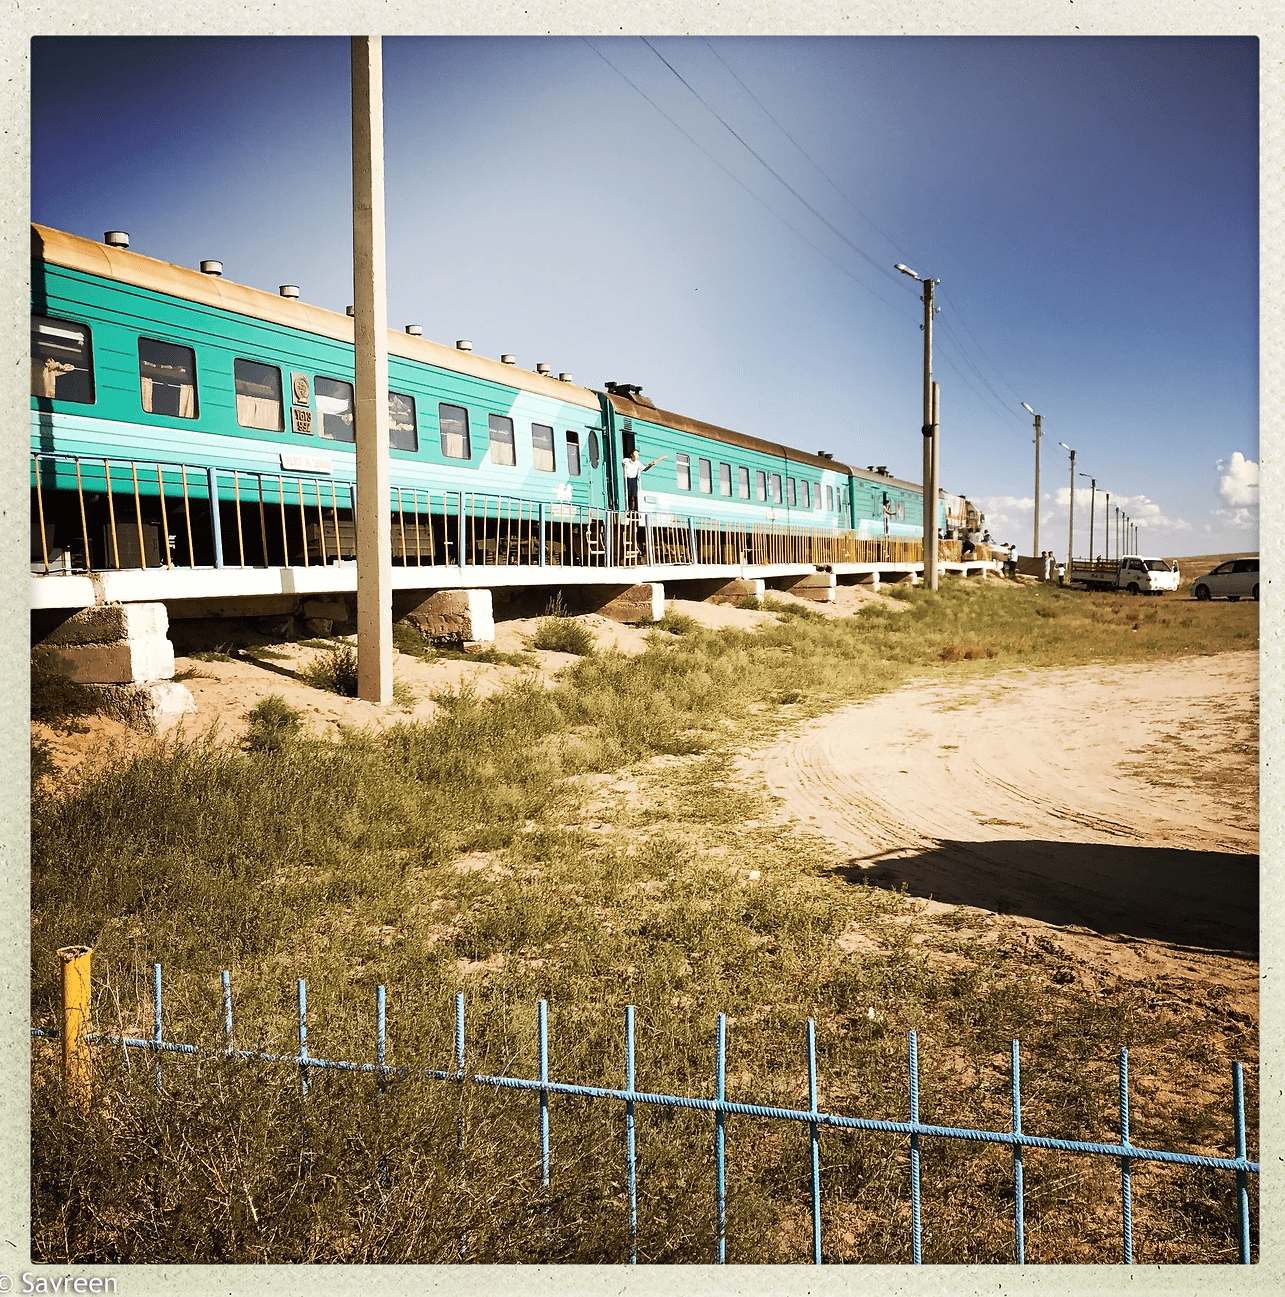 Local Trans Mongolian train